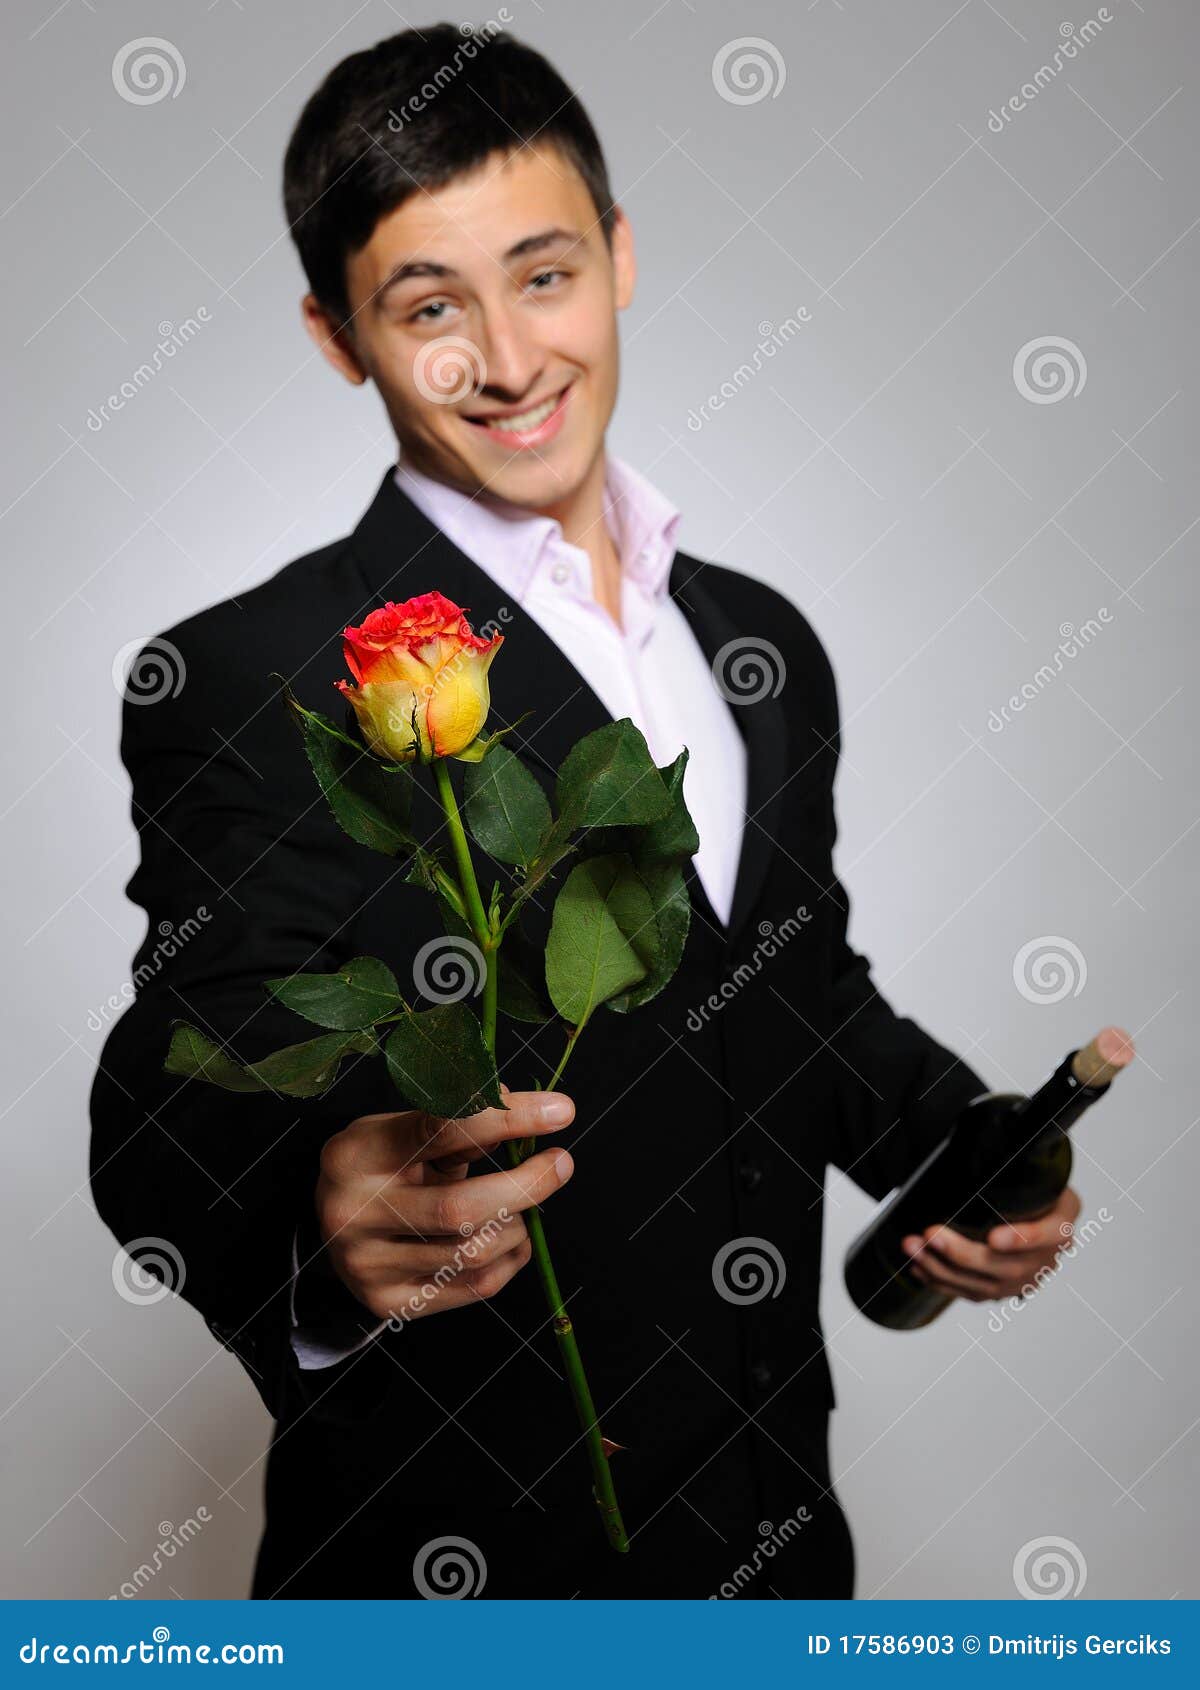 Romantic Guy Dating